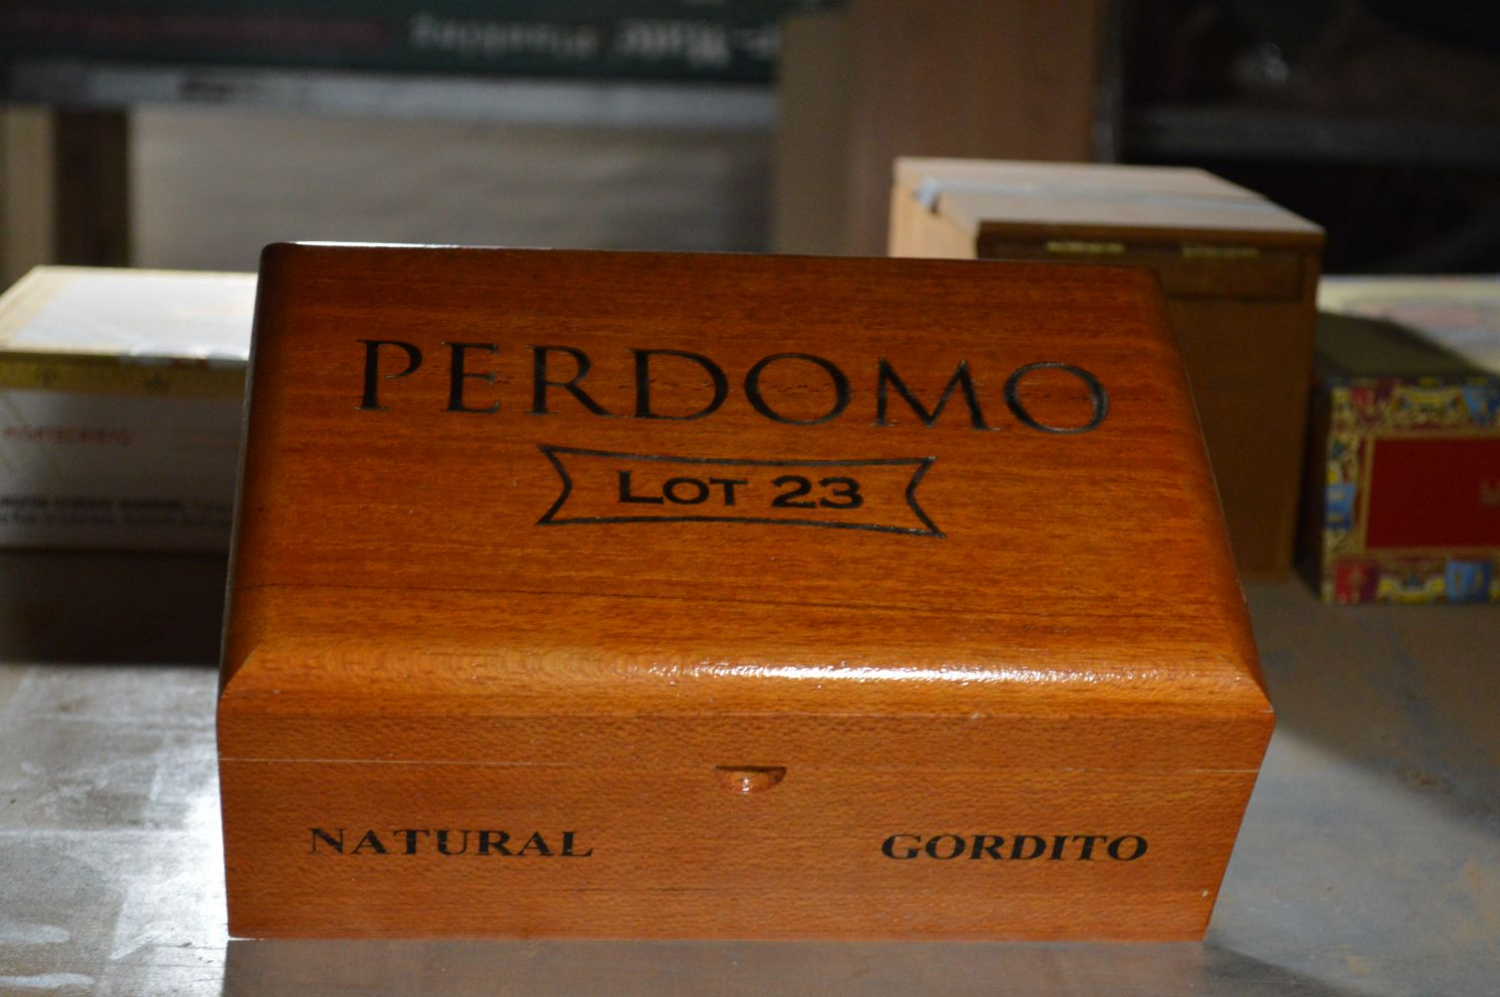 Perdomo Lot 23 Natural Gordito Empty Wooden Box